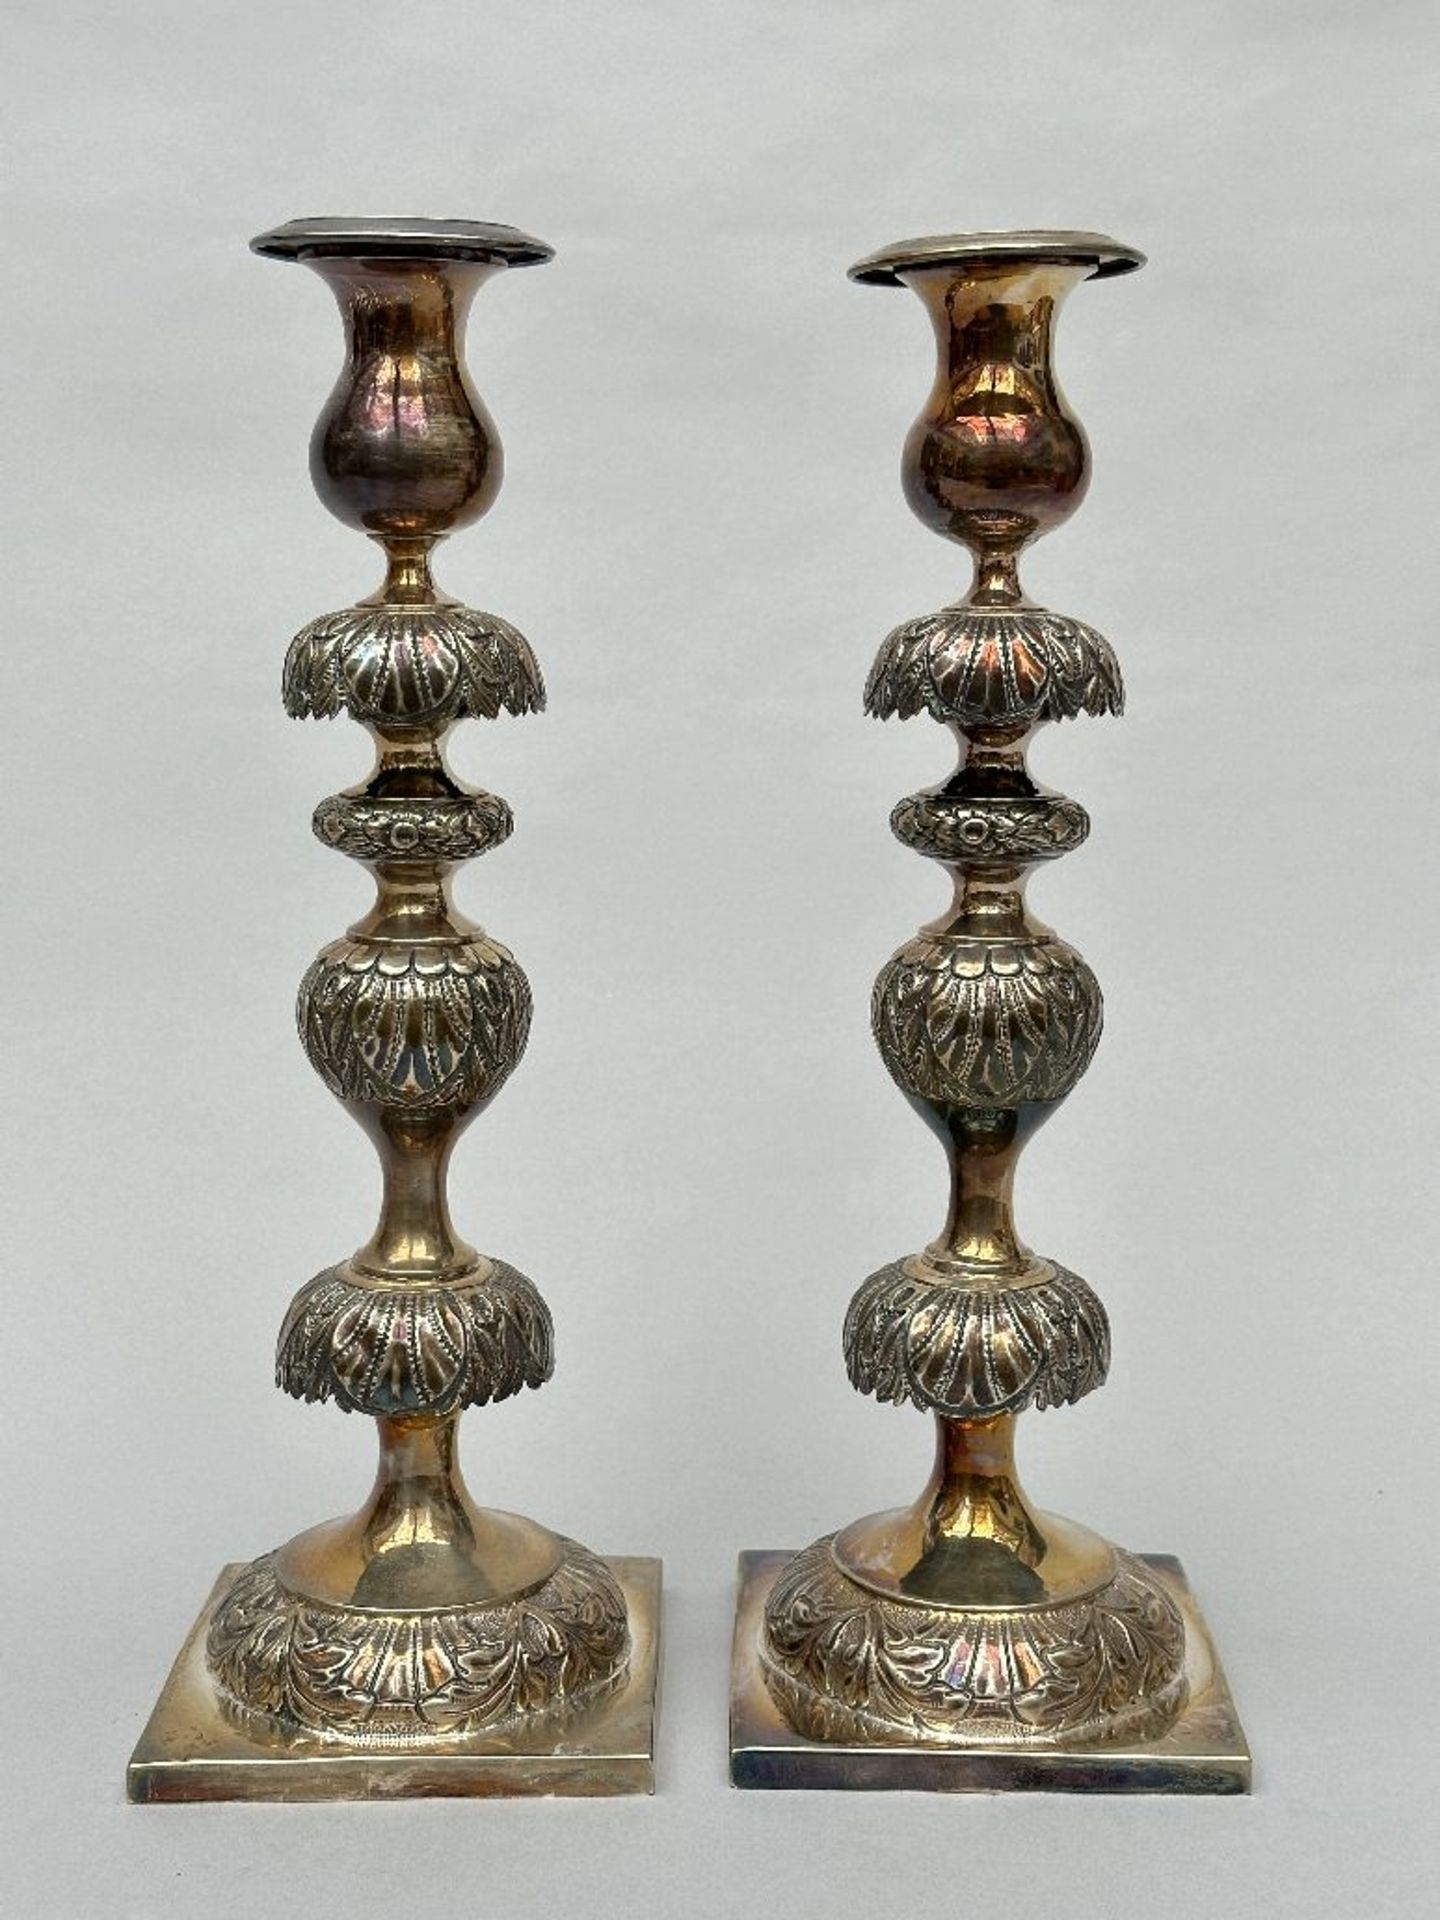 A pair of silver candlesticks by Jan Pogorzelski, 1863